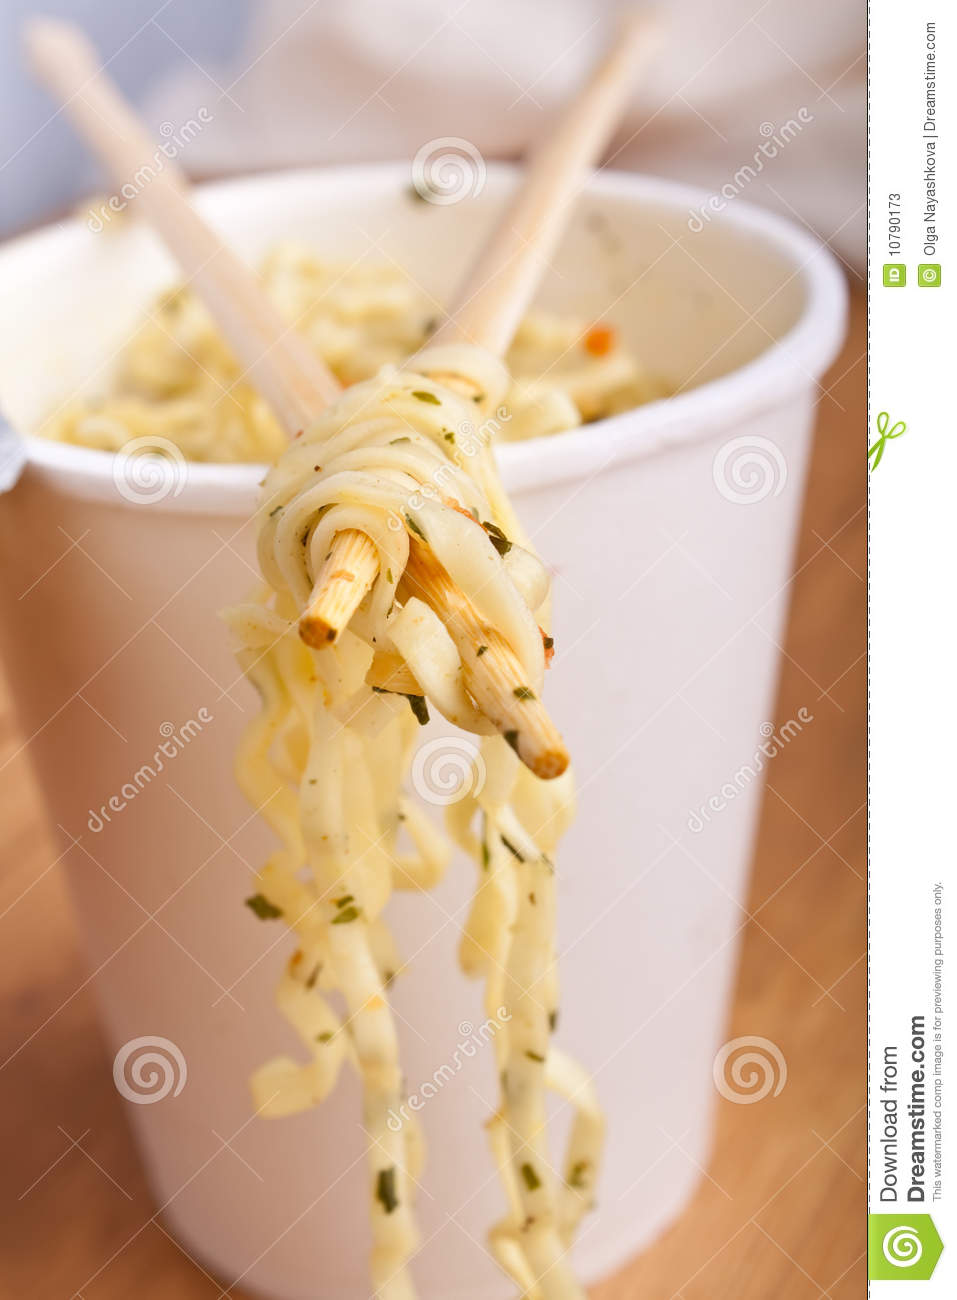 Cup Of Ramen Noodles Stock Photos   Image  10790173